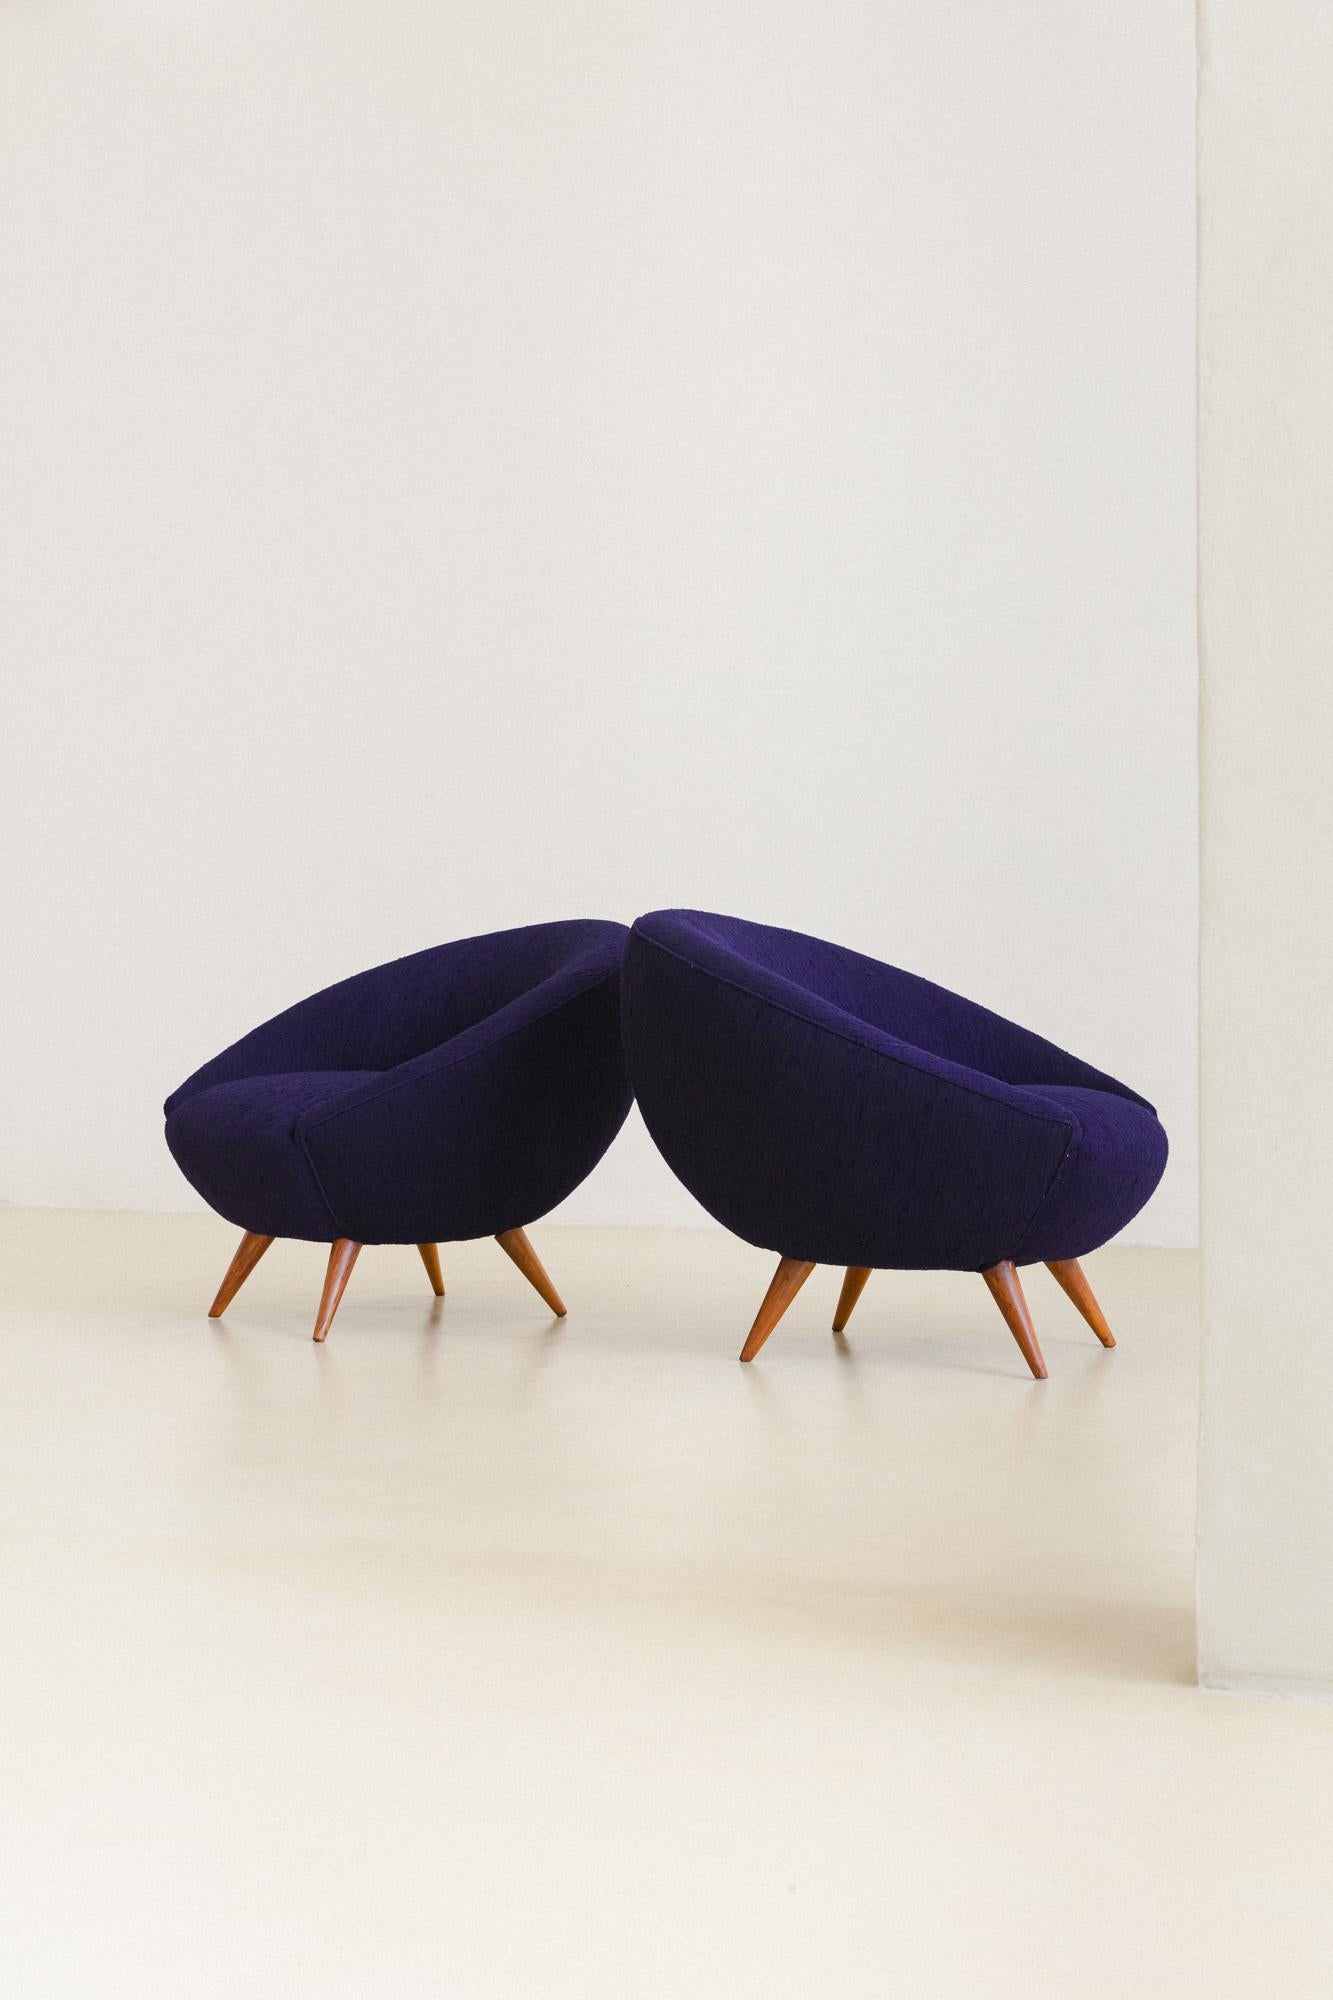 Brazilian Midcentury Design, Round Armchairs, Organic Silk Upholstery, 1950s For Sale 6